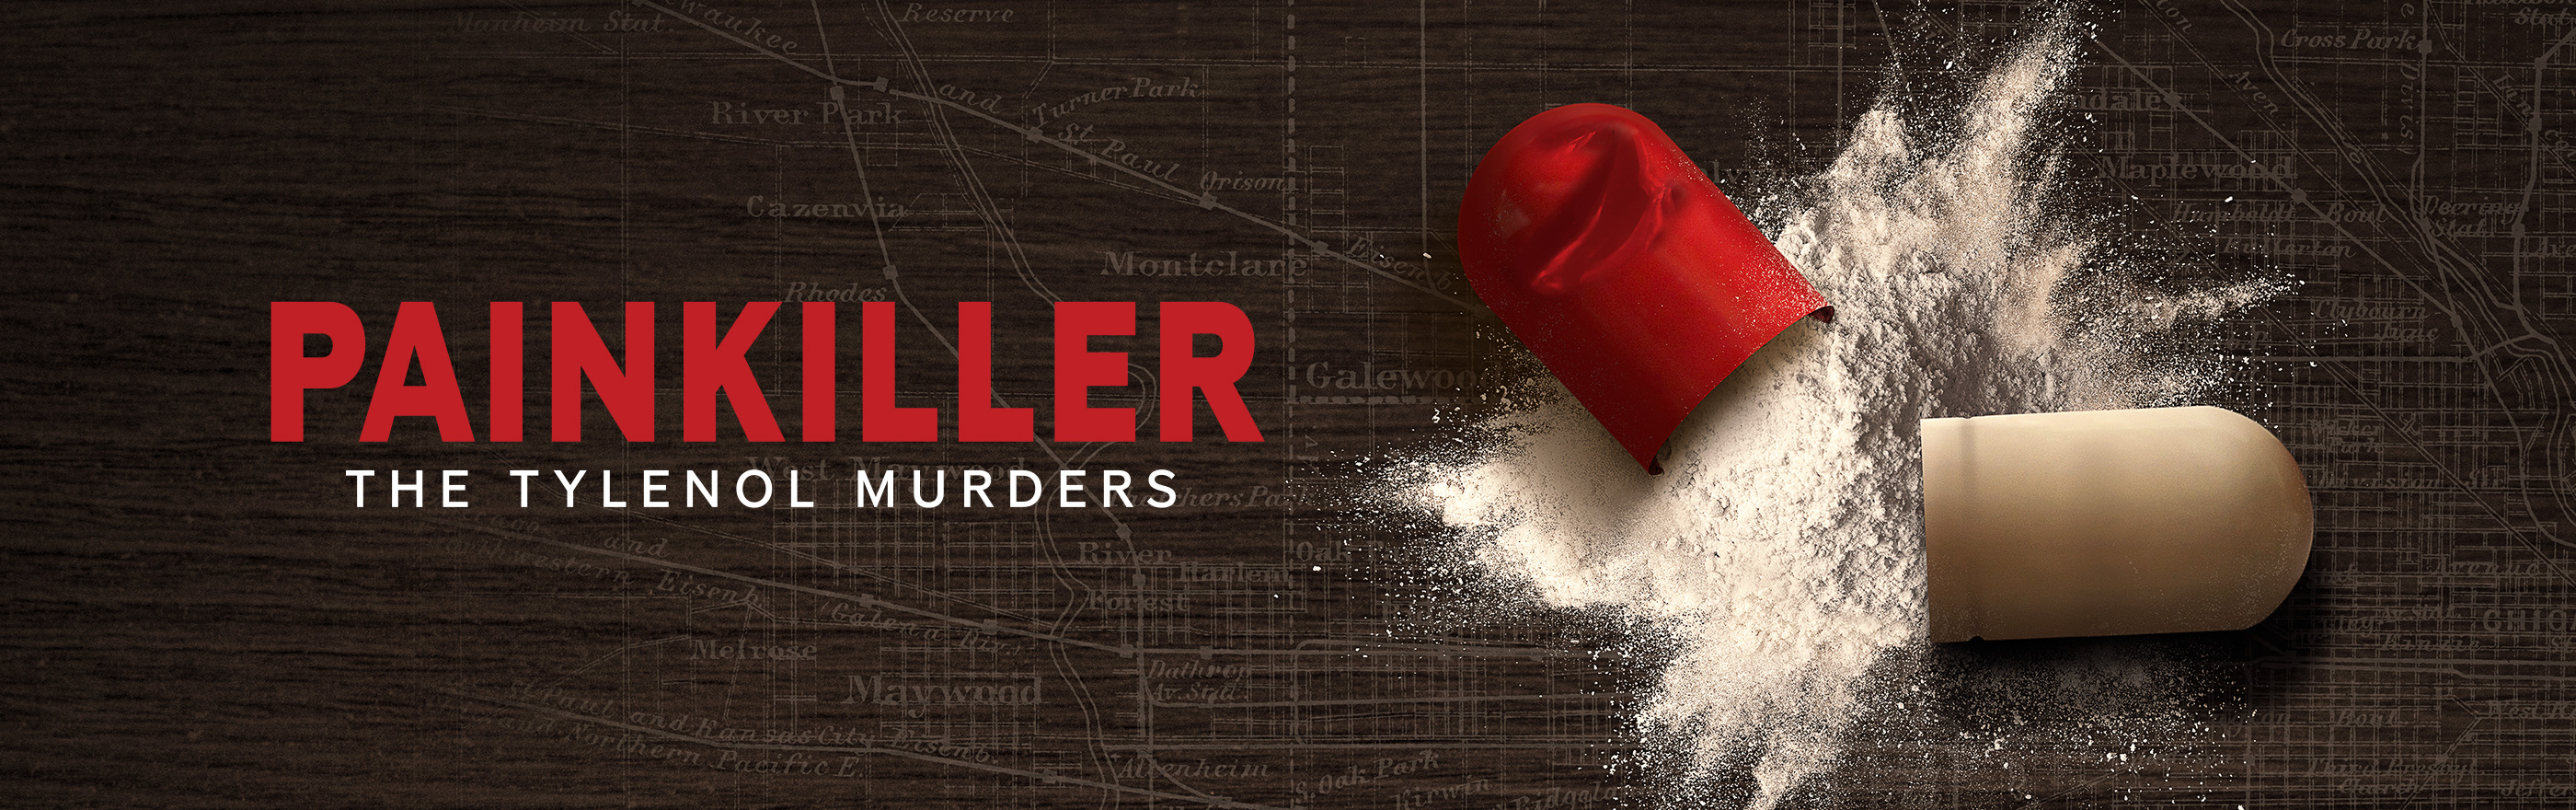 Painkiller: The Tylenol Murders LOGO